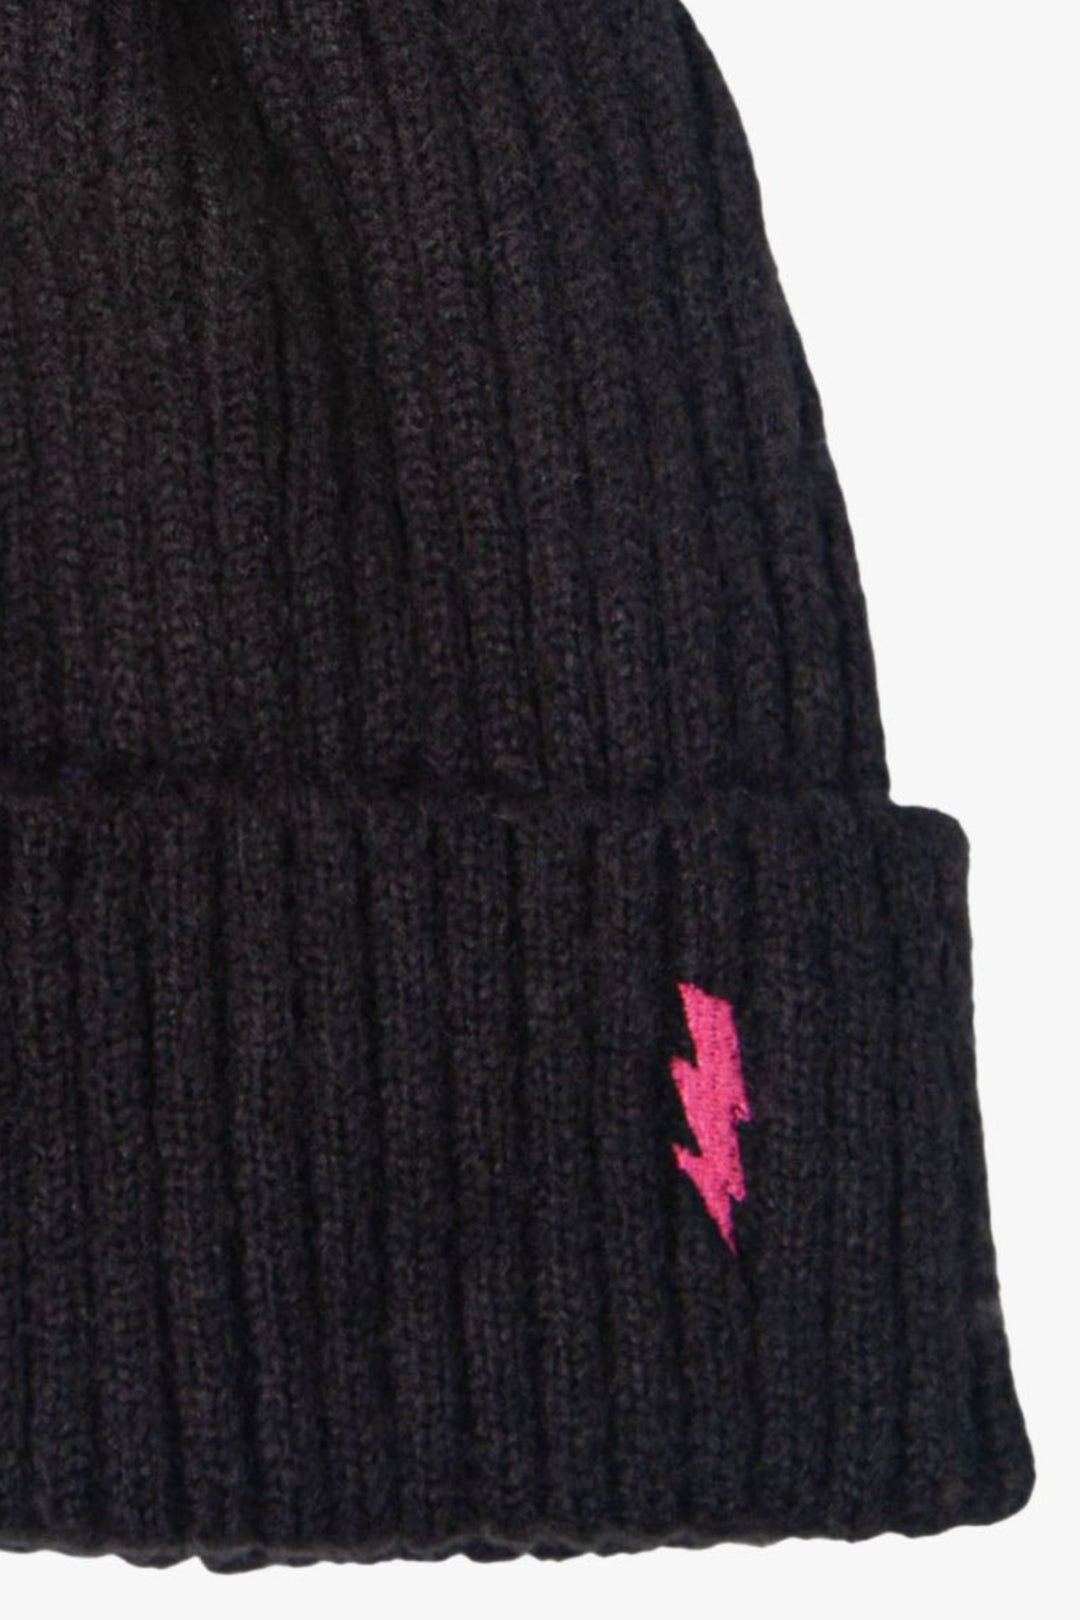 Black Fuchsia Lightning Bolt Embroidered Hat